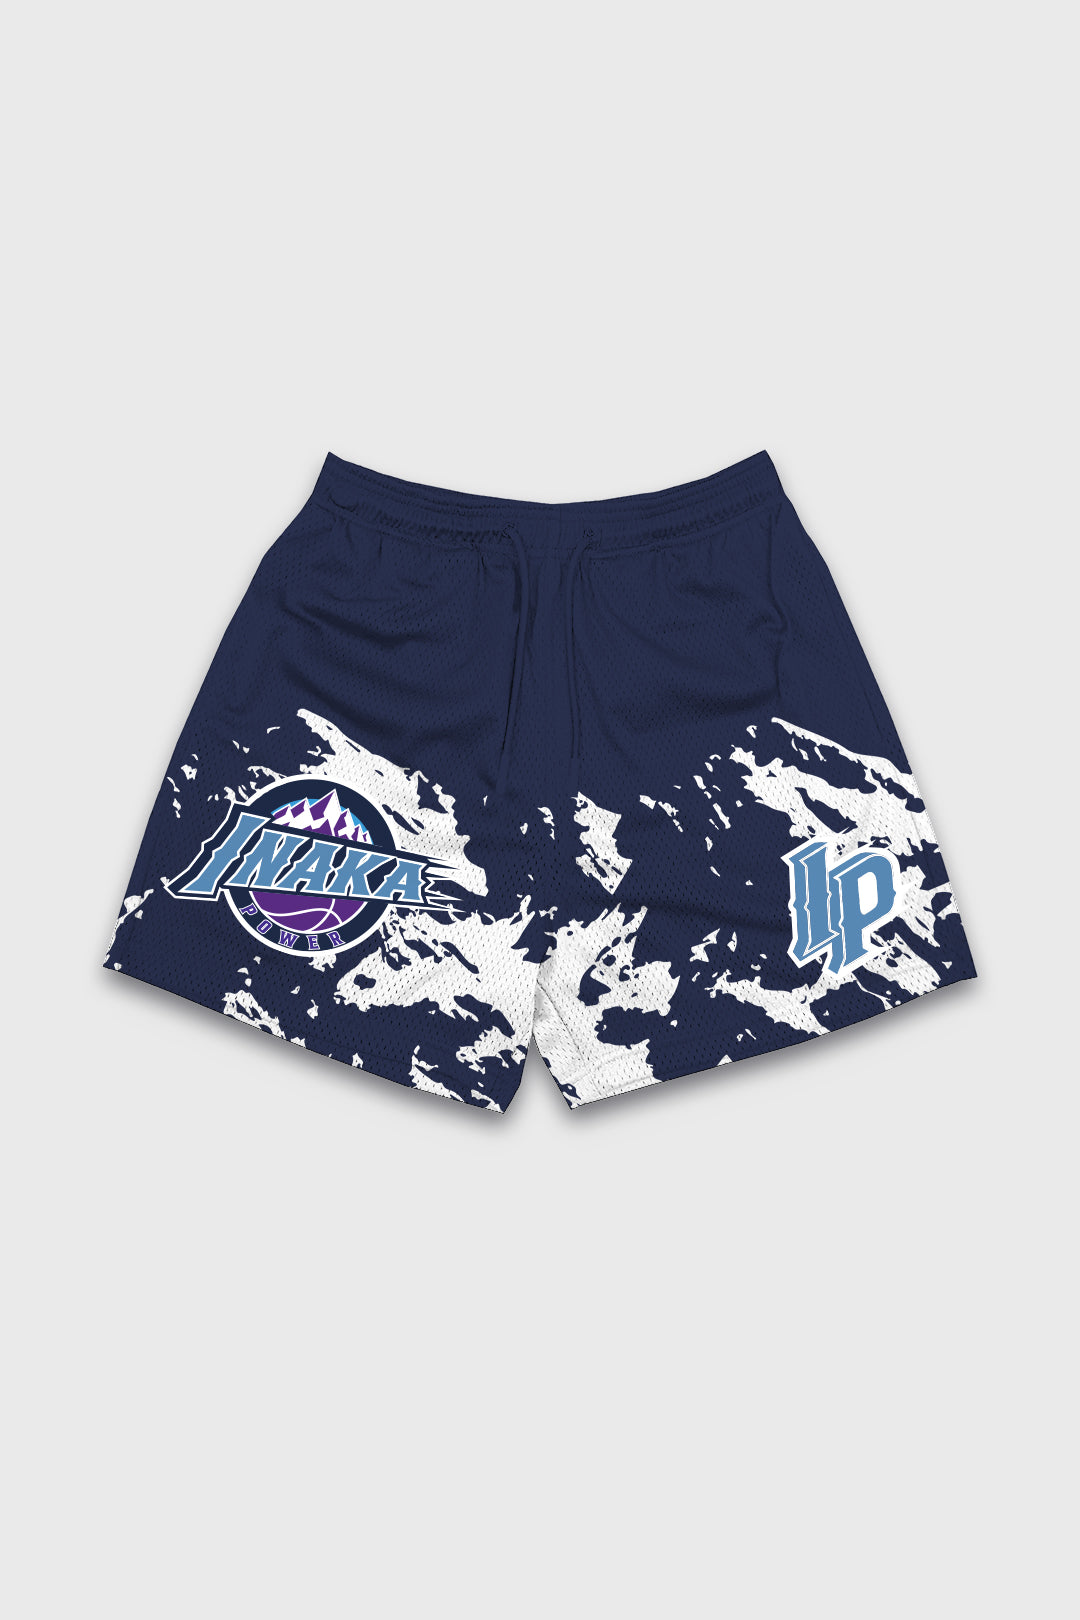 Men's Utah Shorts - Navy